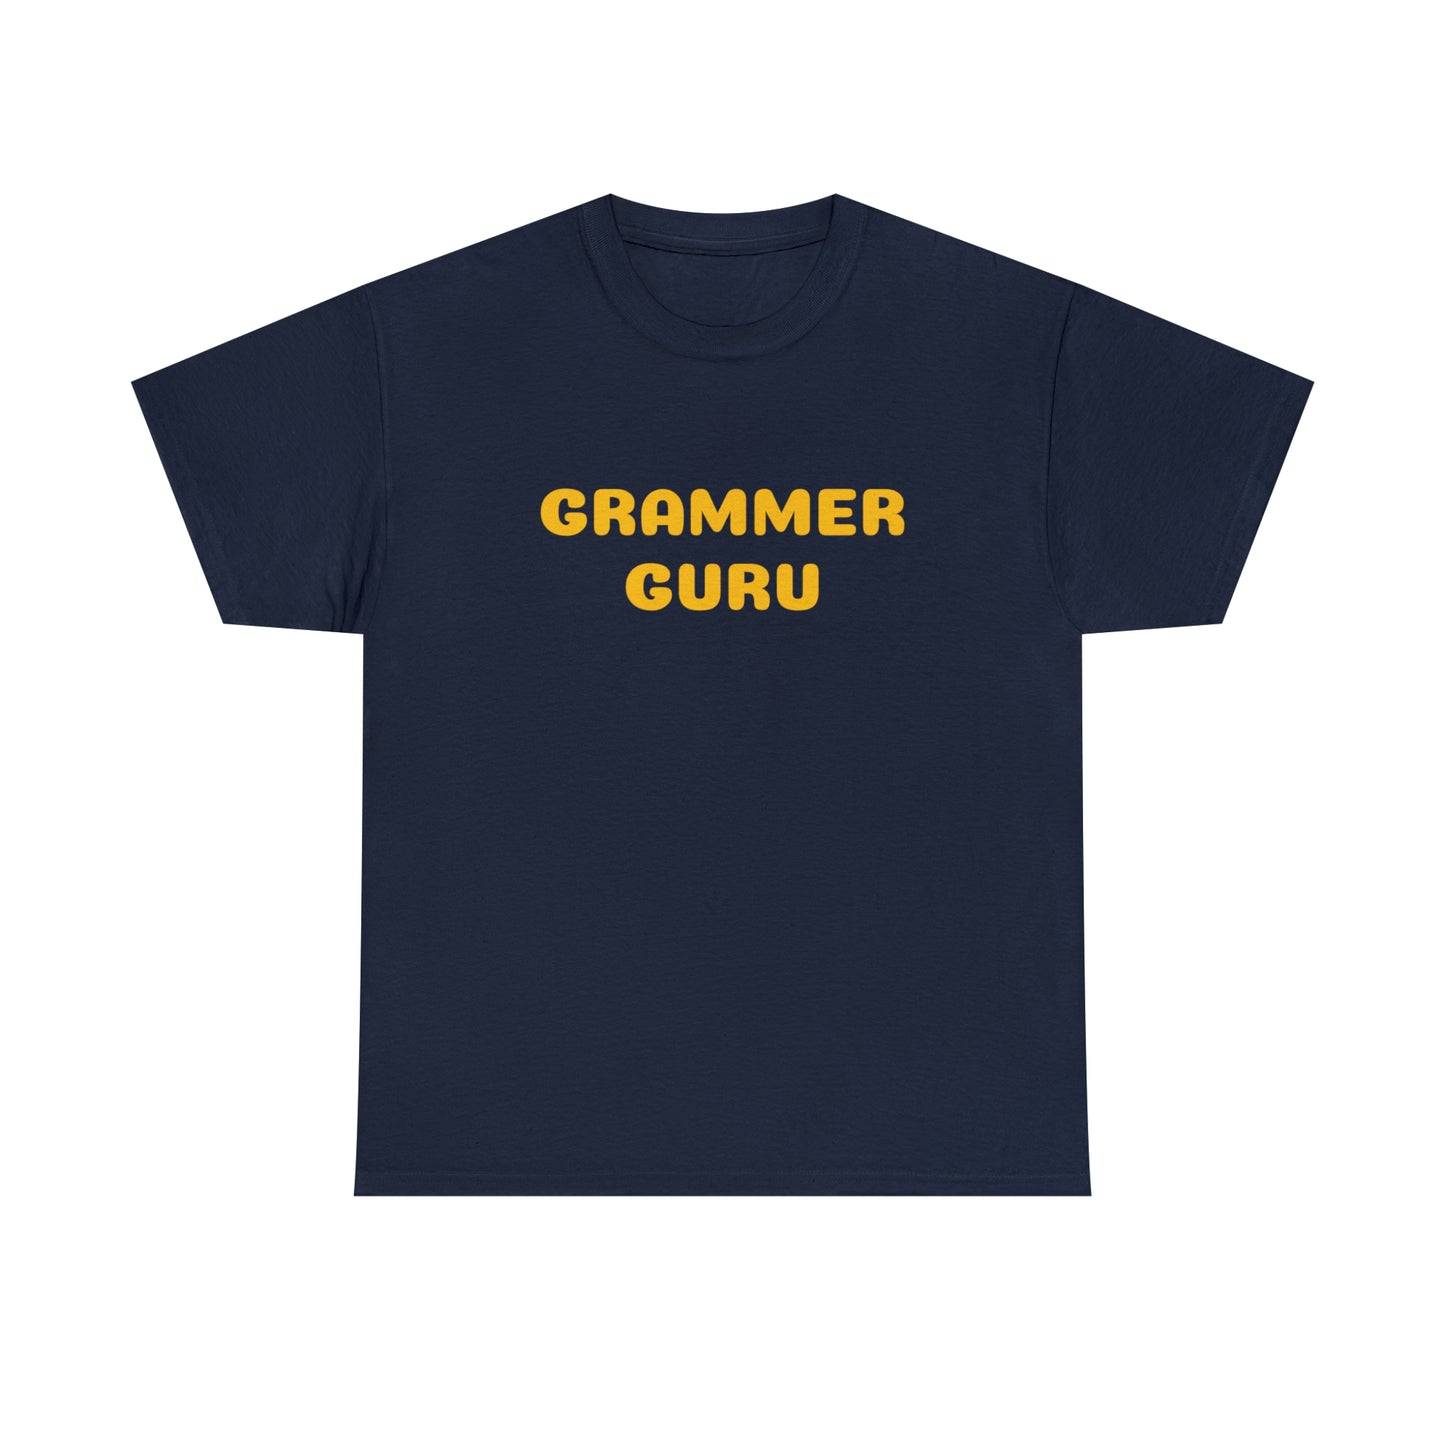 Custom Parody T-shirt, Grammer guru shirt design